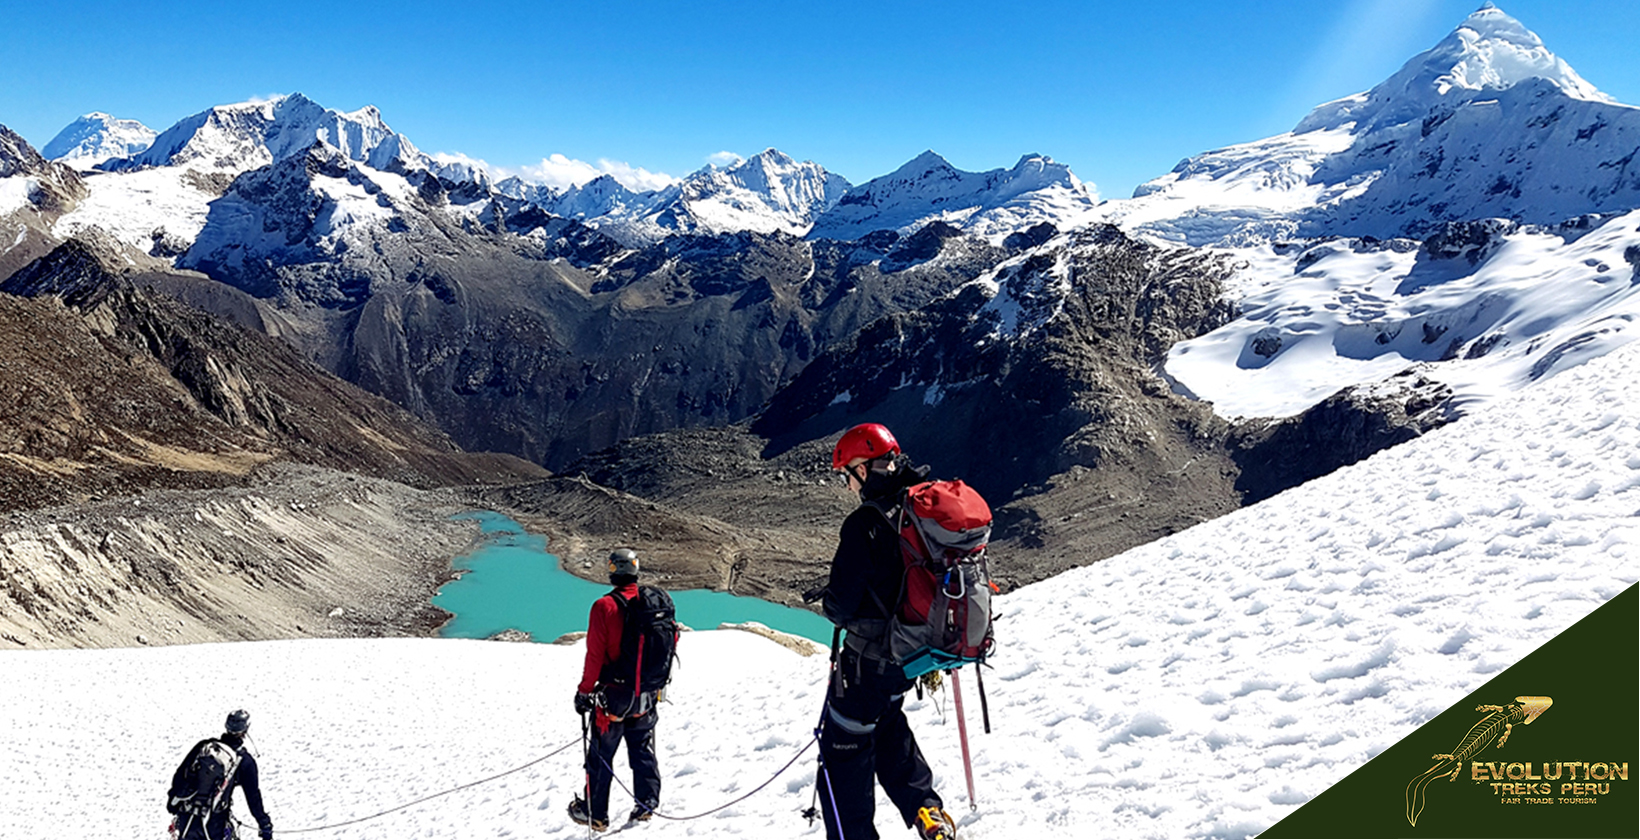 Nevado Ishinca Peru Guide: History, Hiking, Facts, Maps, and Tours